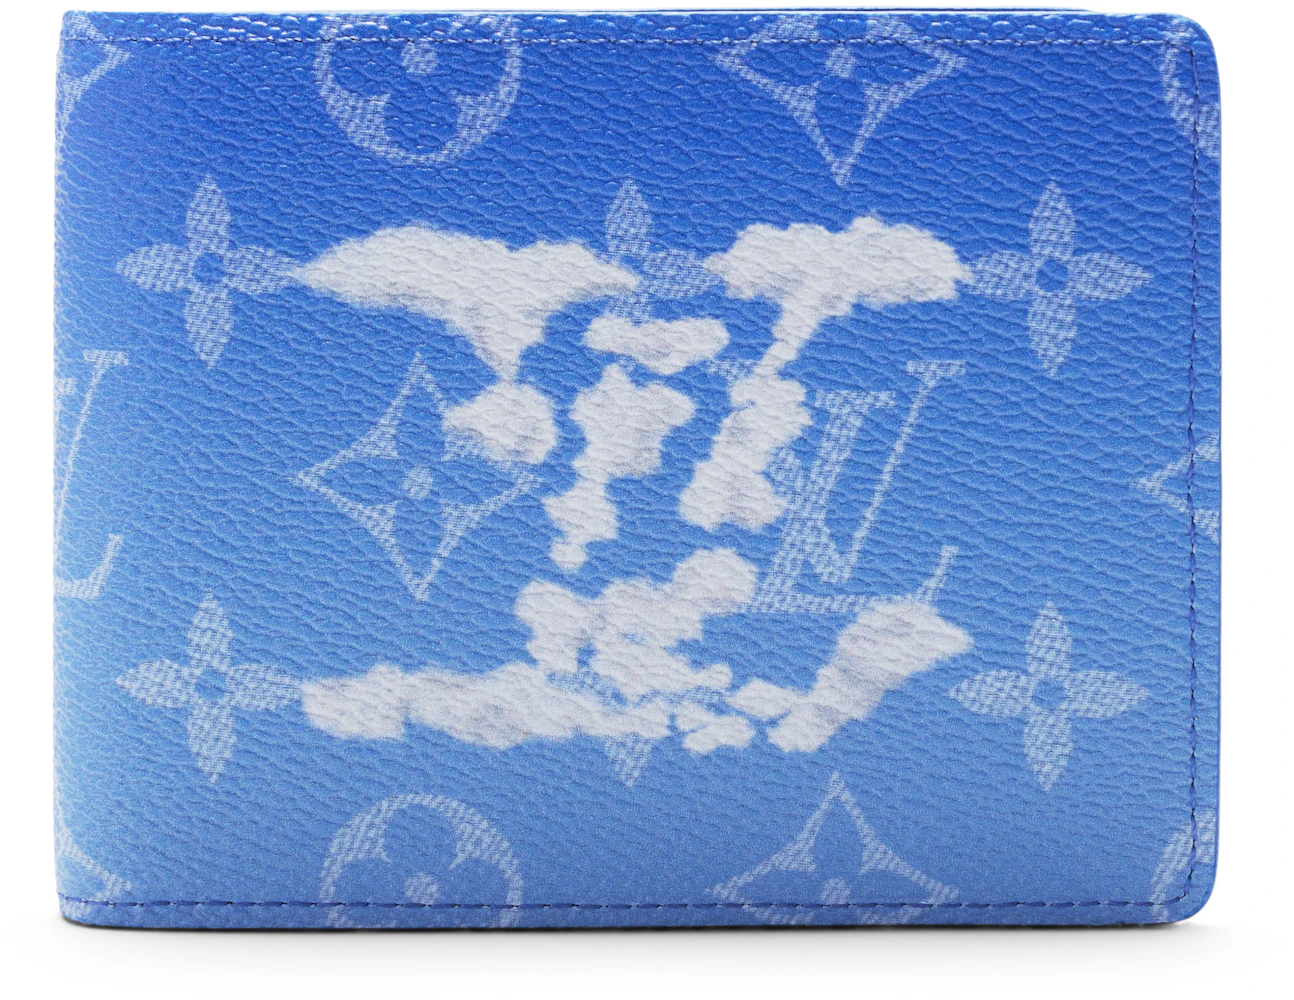 Louis Vuitton Slender Wallet Clouds Monogram Blue in Coated